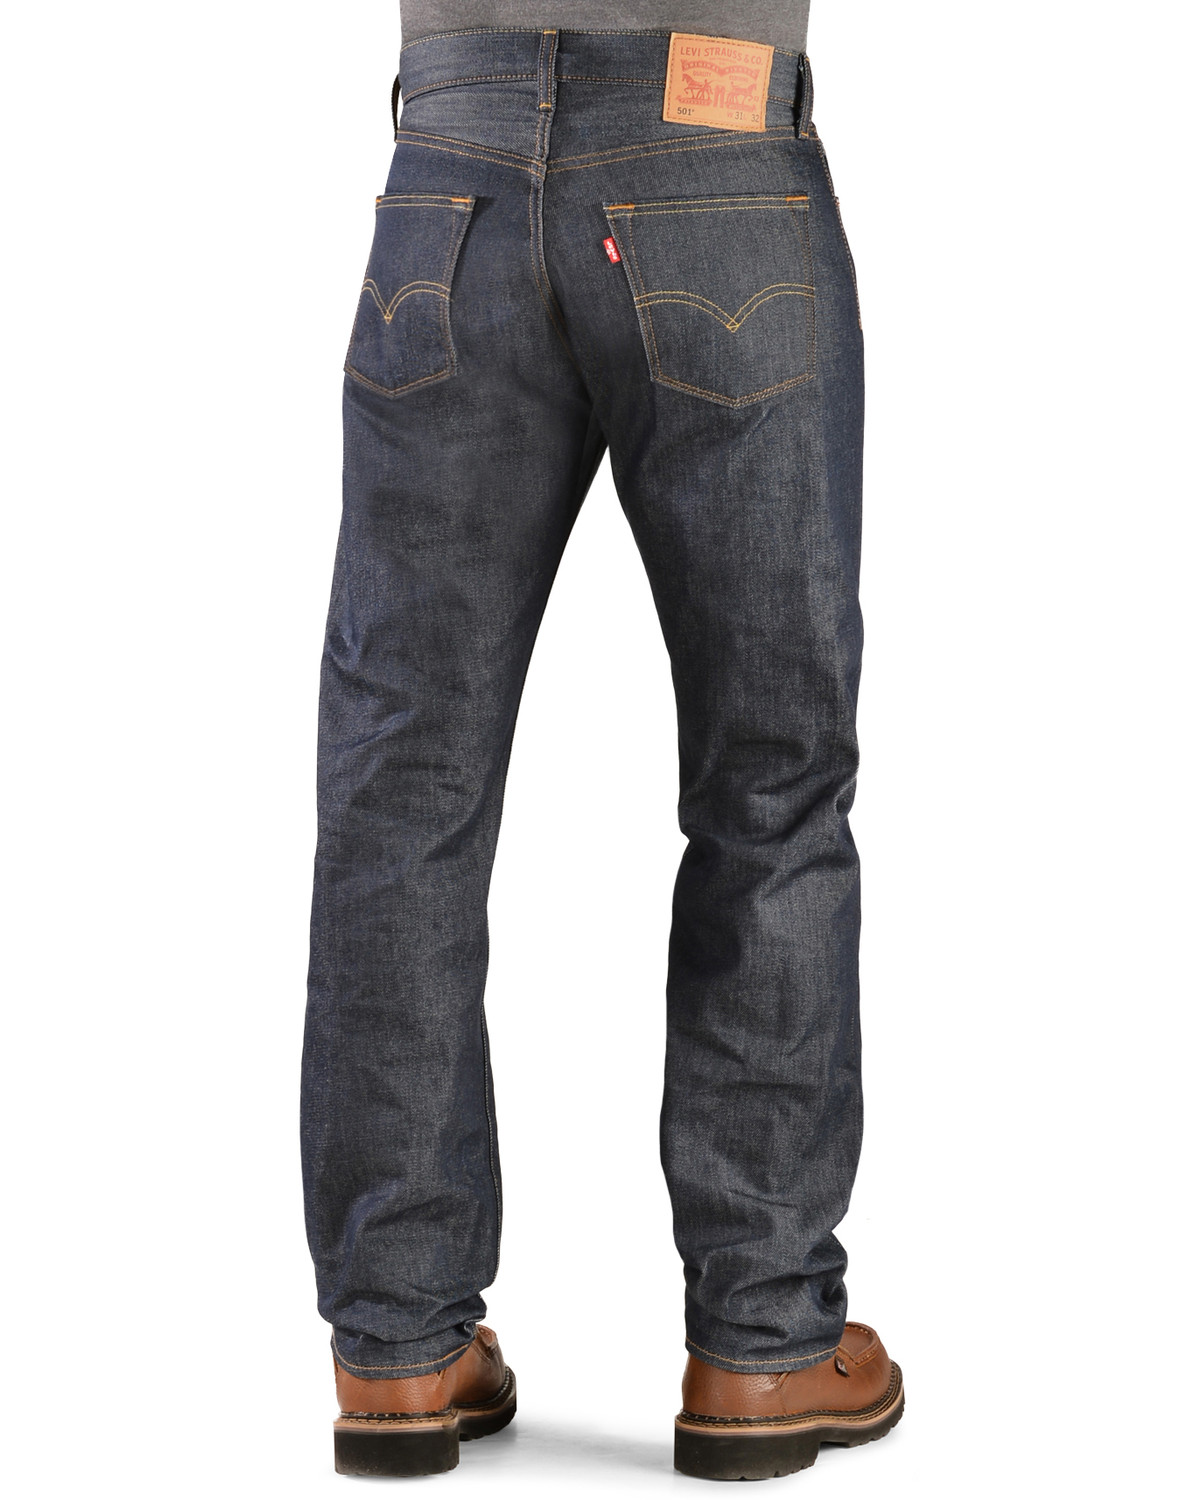 Levi's 501 Jeans - Original Shrink-to-Fit | Sheplers